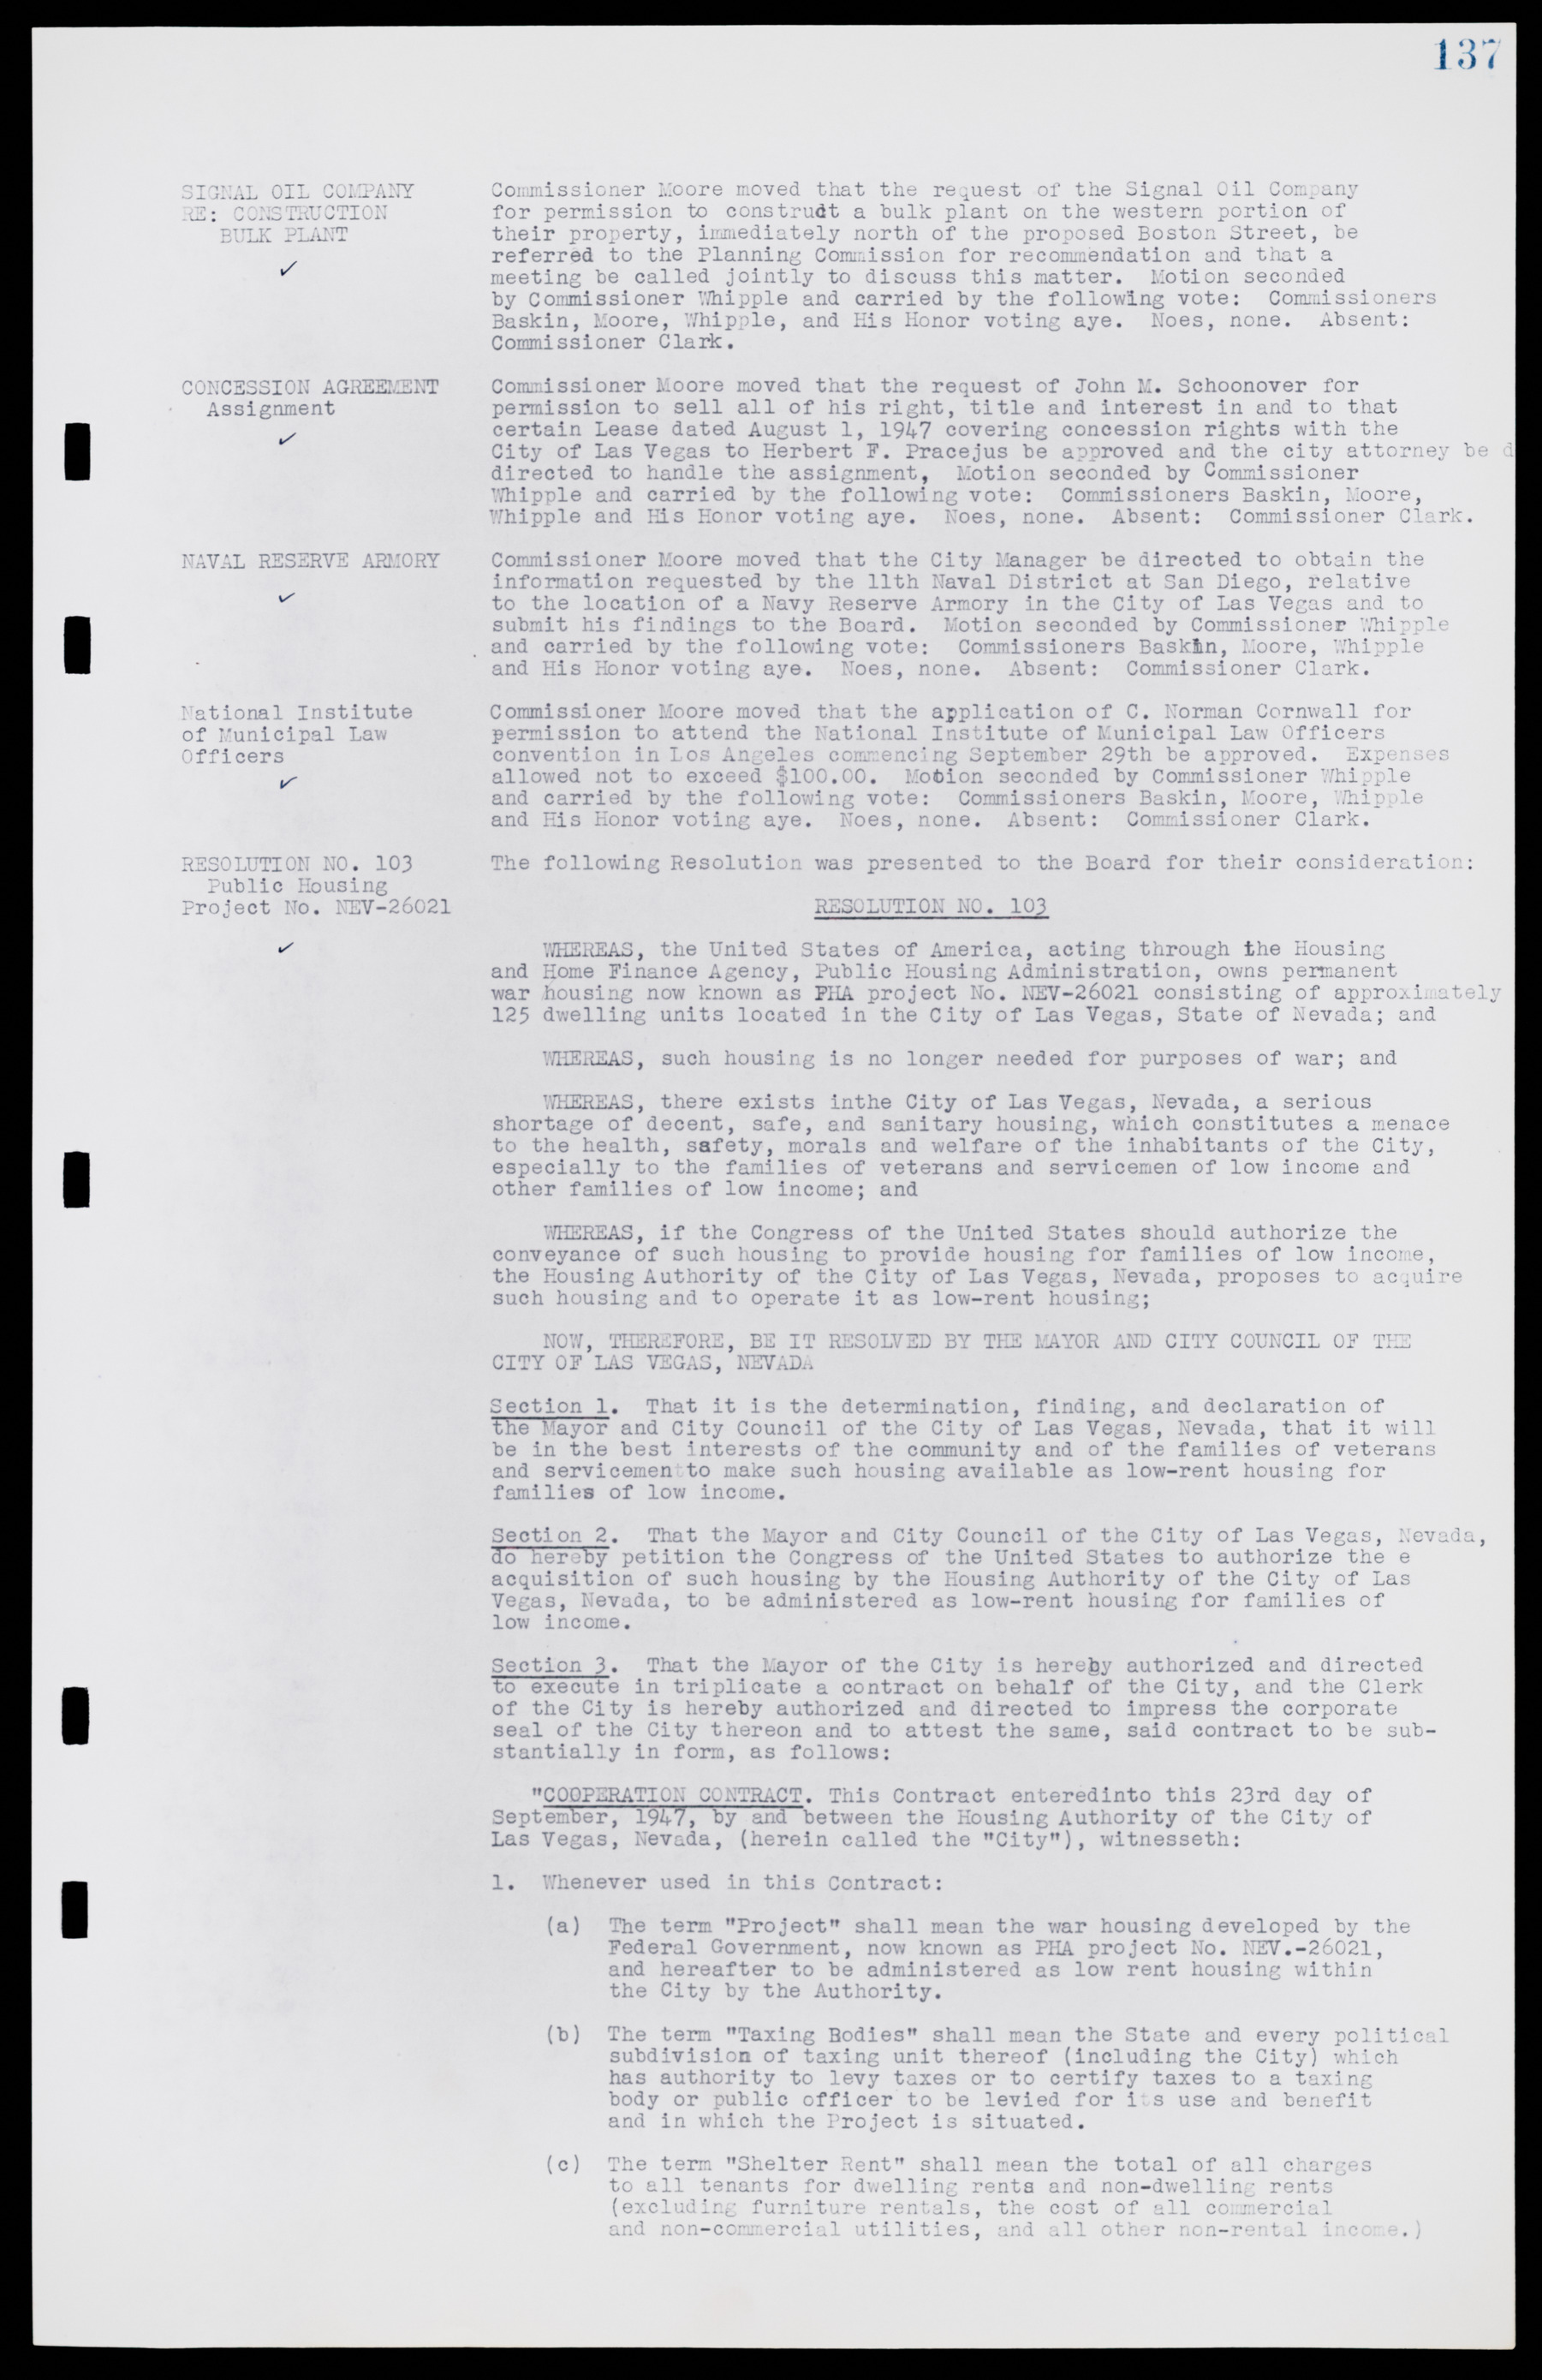 Las Vegas City Commission Minutes, January 7, 1947 to October 26, 1949, lvc000006-155